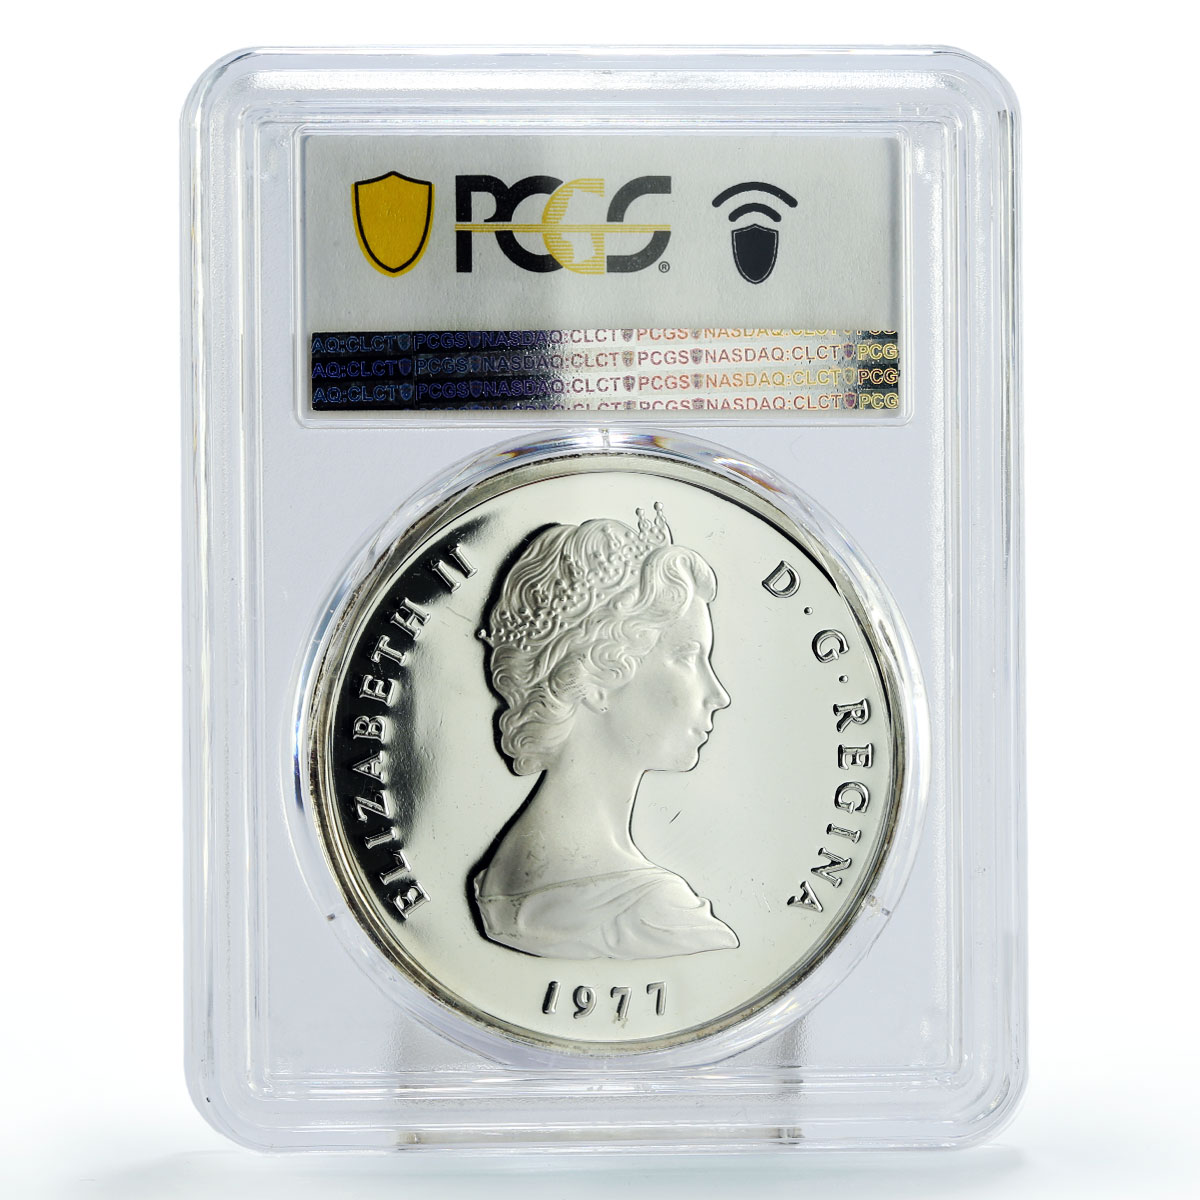 Turks and Caicos Islands 20 crowns Queen Victoria PR67 PCGS silver coin 1977